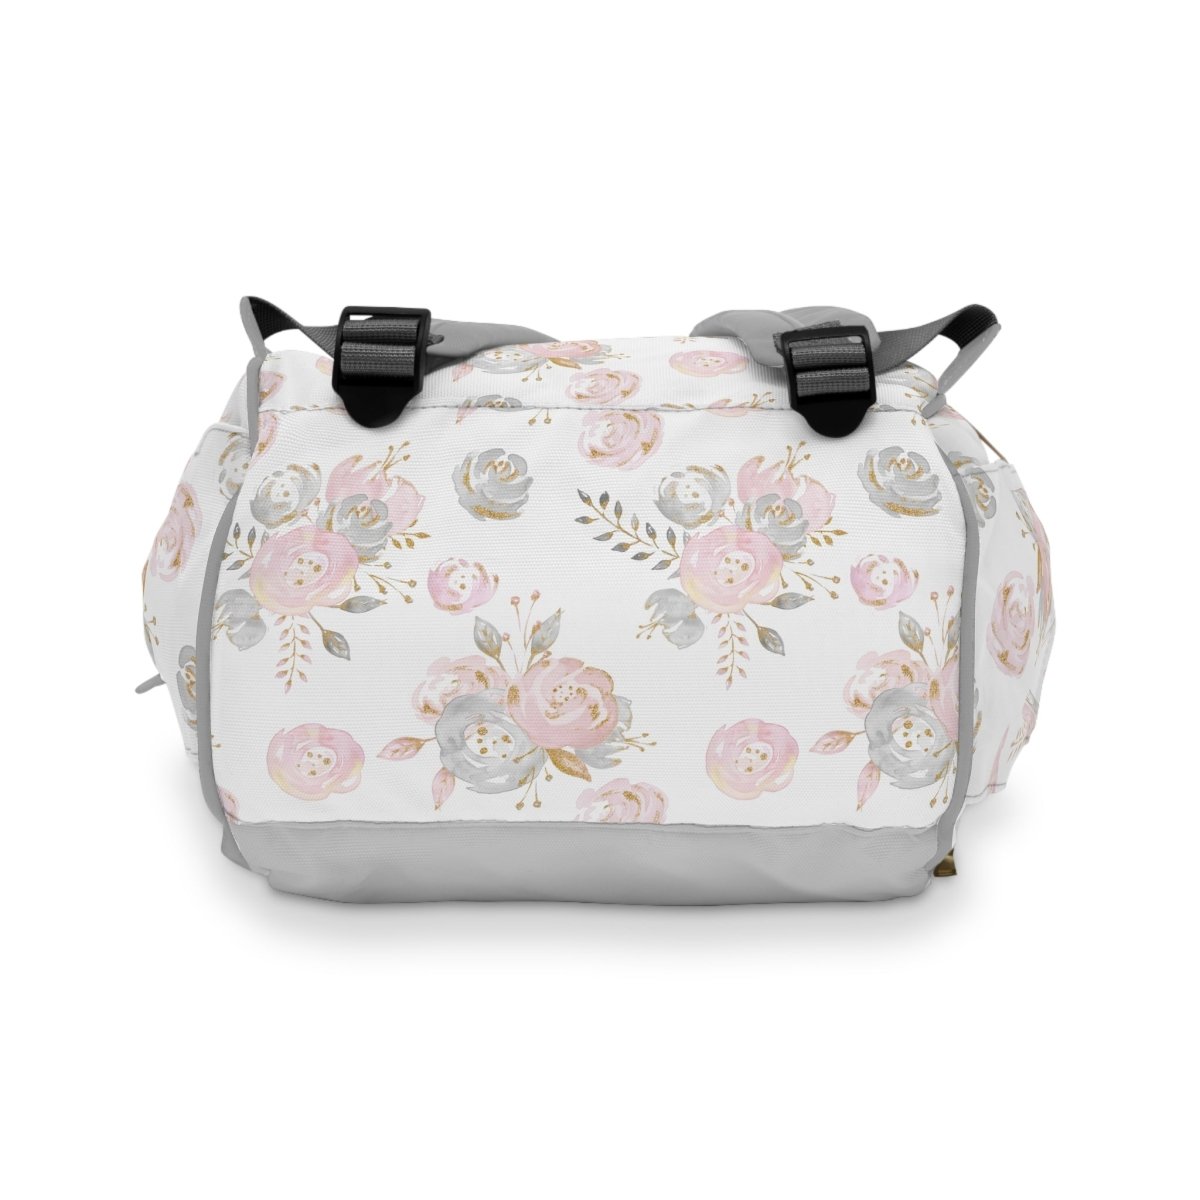 Blush Gold Floral Personalized Backpack Diaper Bag - Diaper Bag